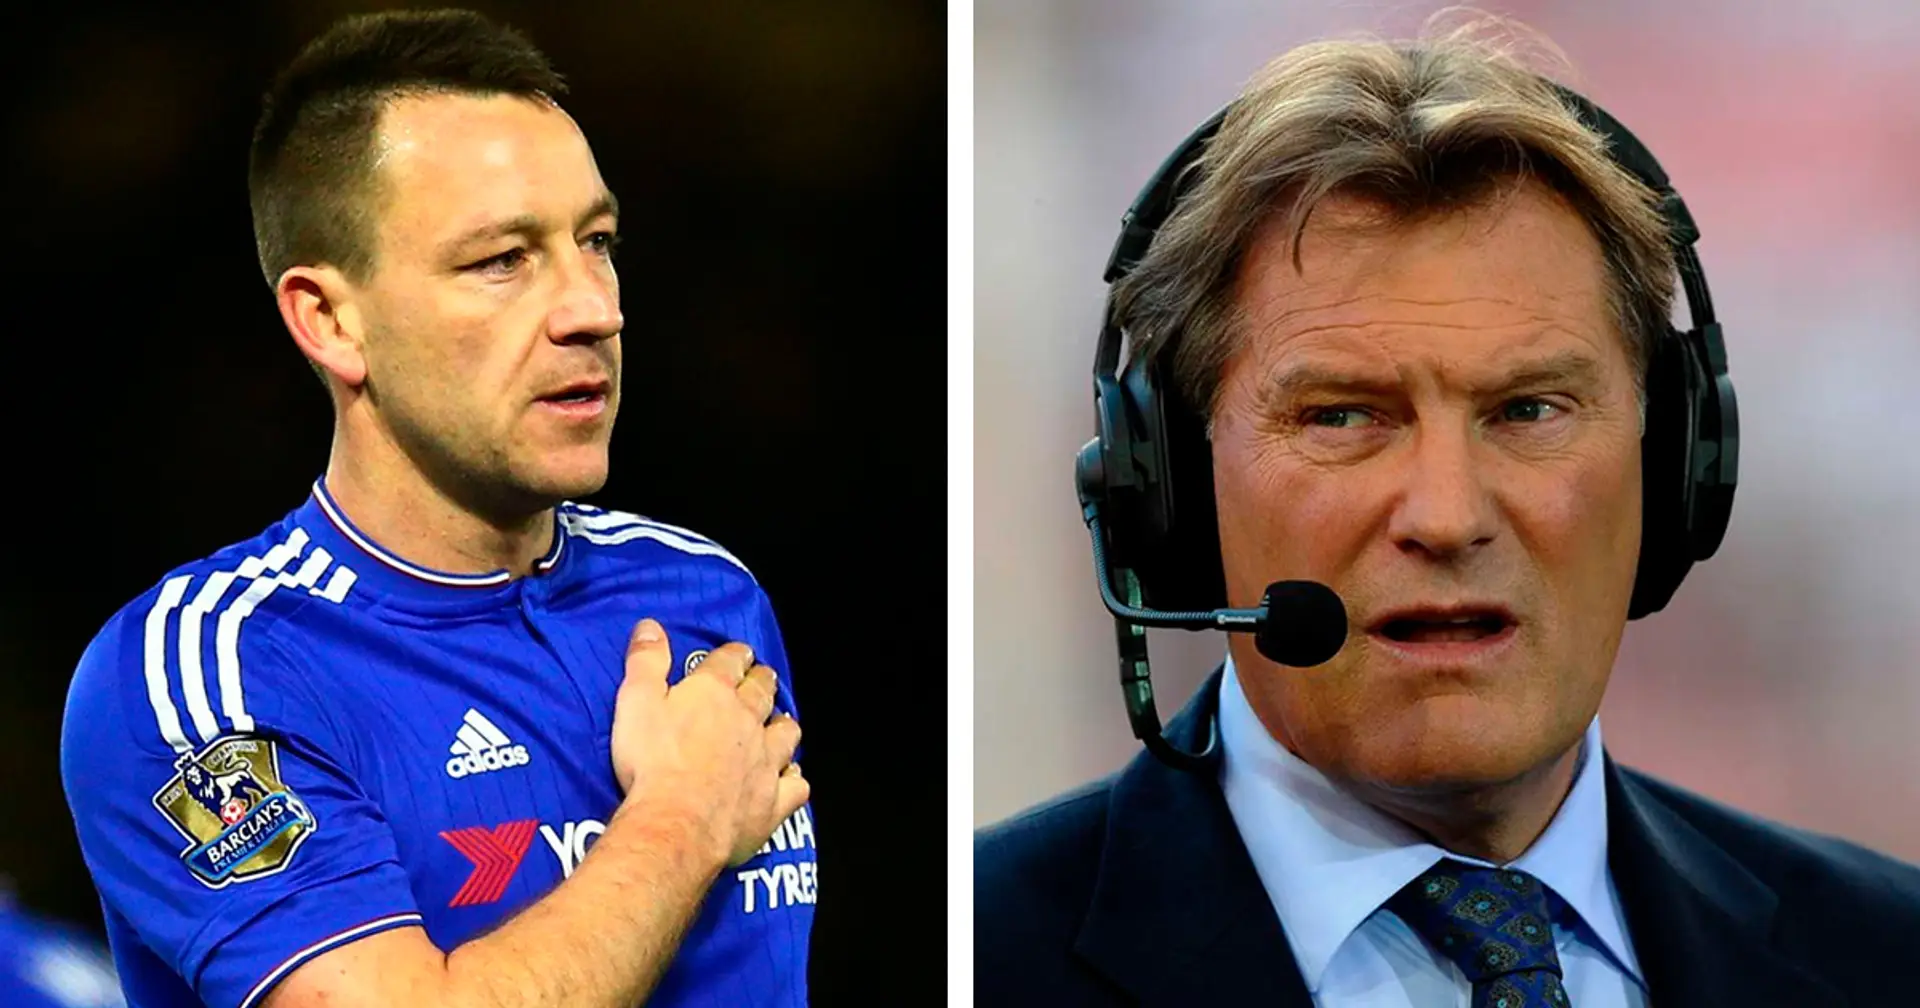 'How do we get a John Terry?': Glenn Hoddle urges Chelsea to sign backline leader after West Ham loss